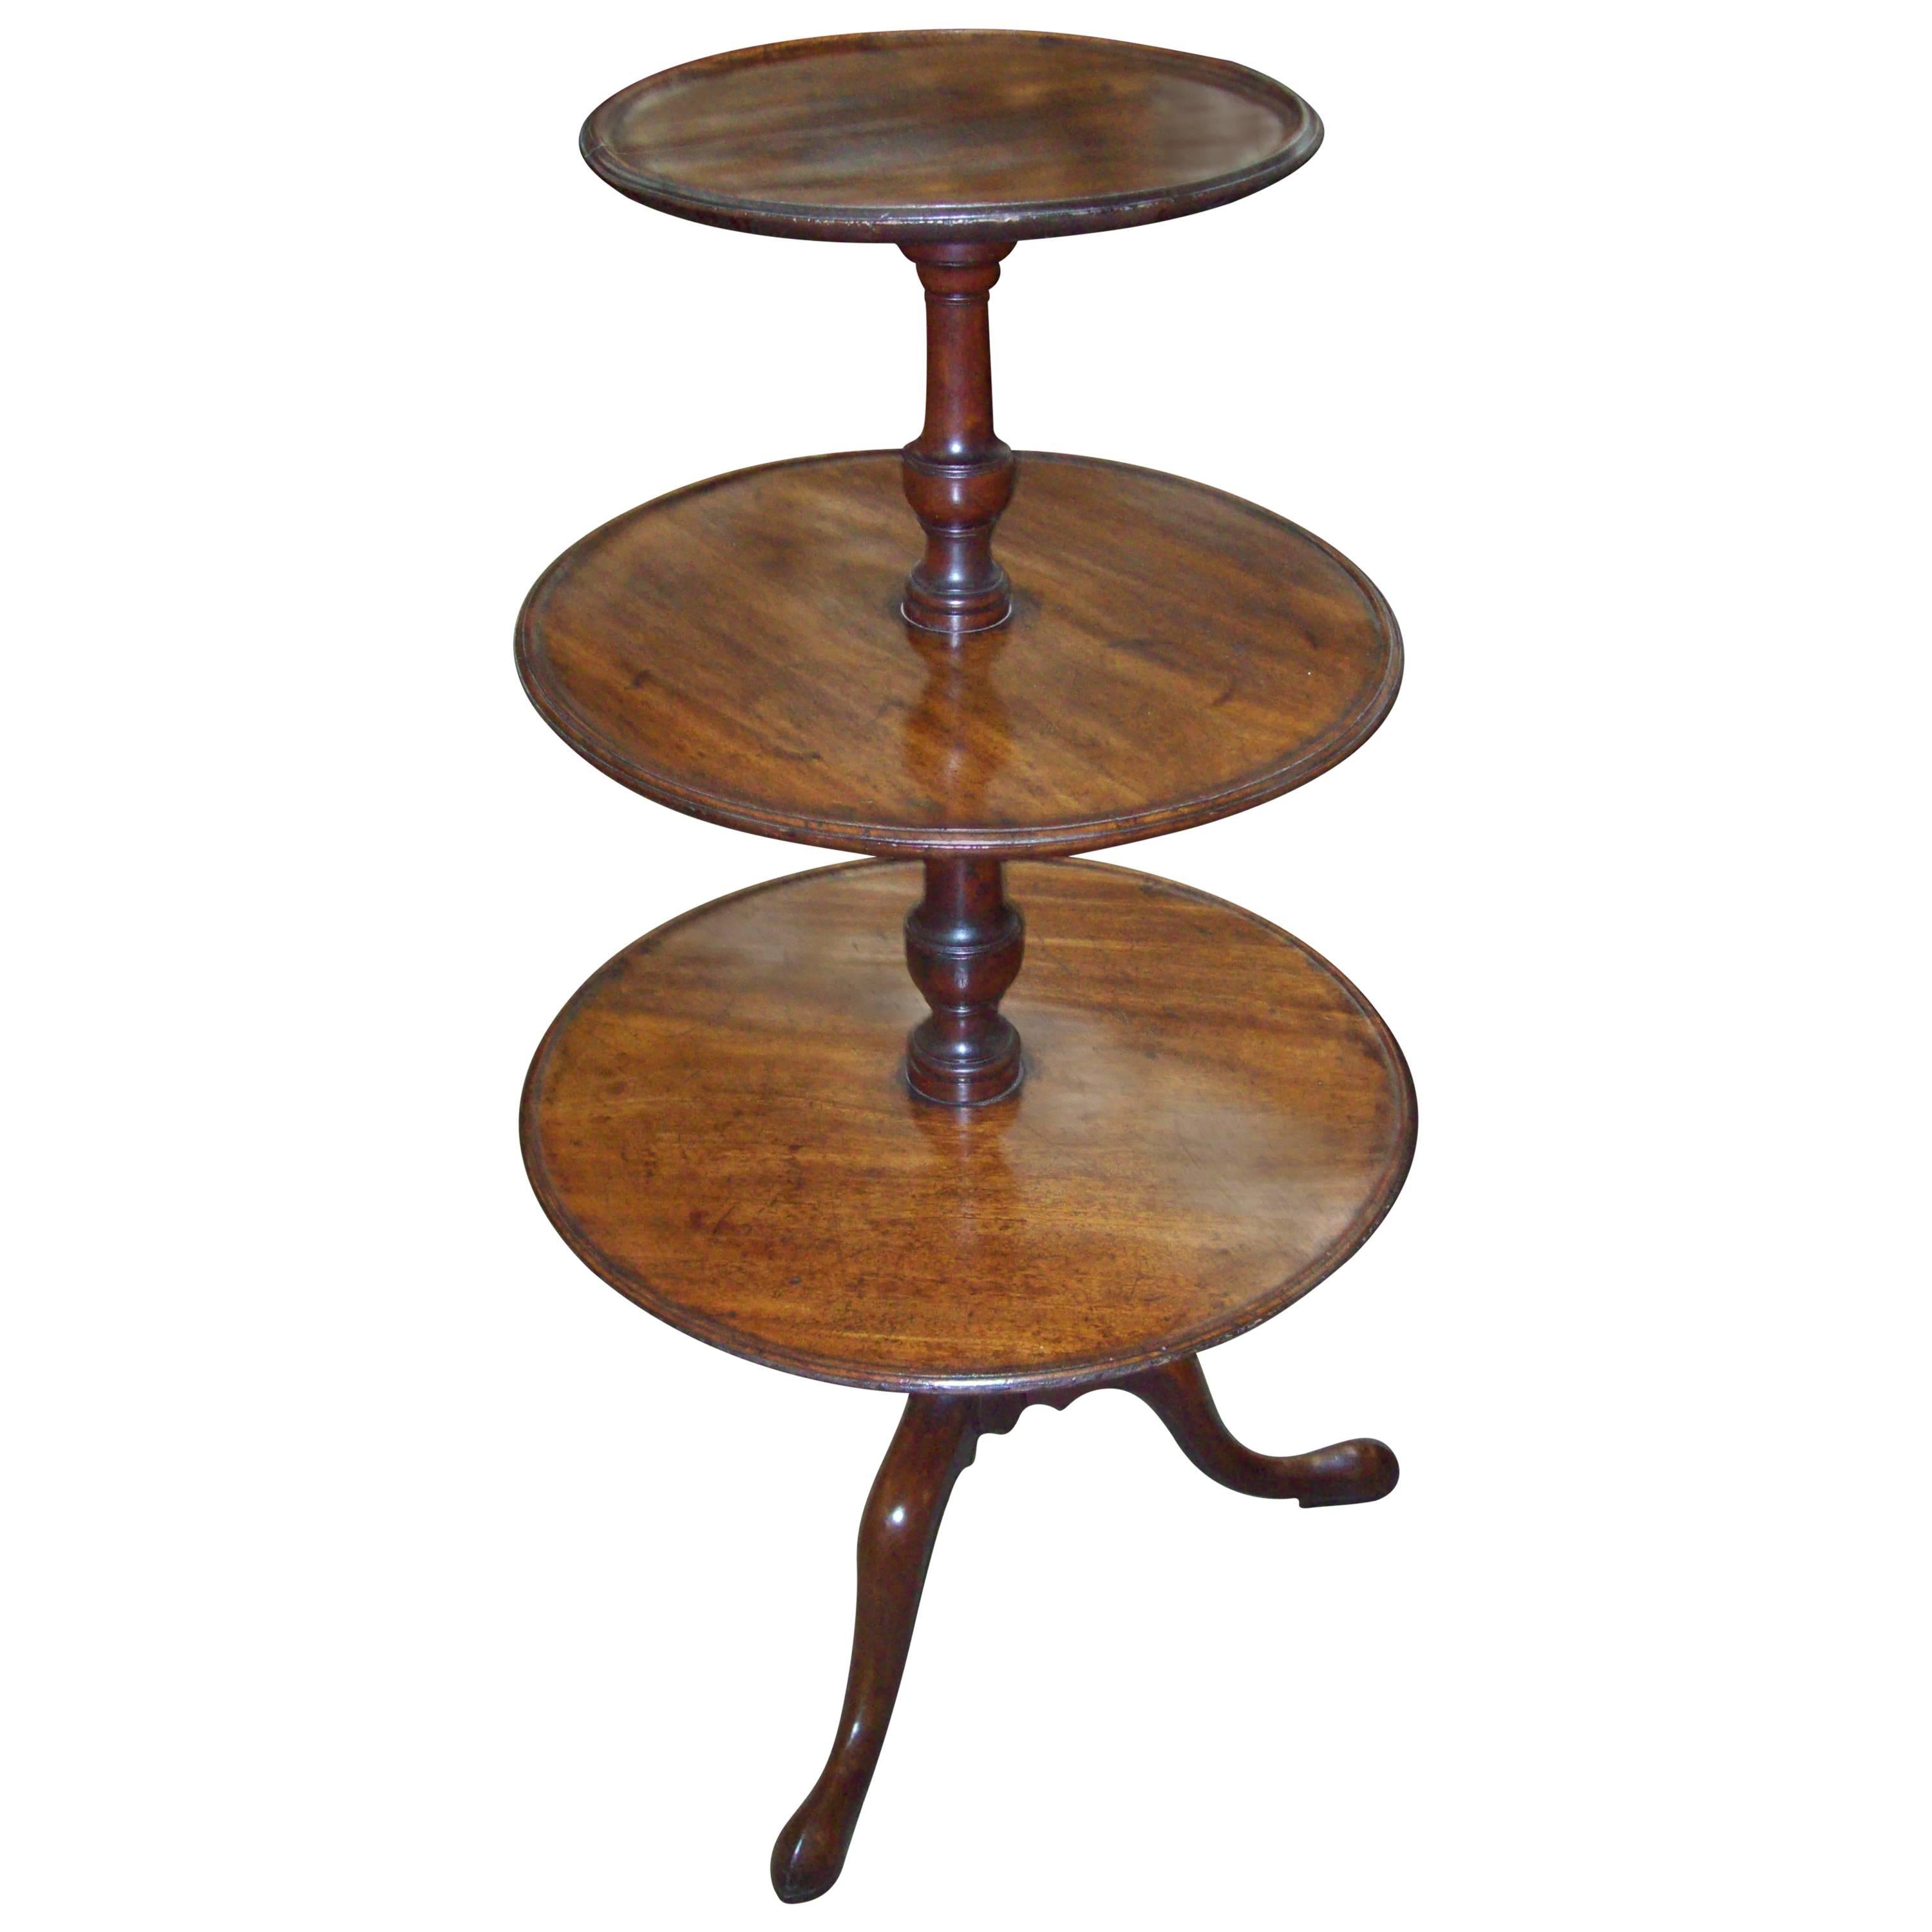 English Mahogany Three-Tier Table "Dumbwaiter" For Sale